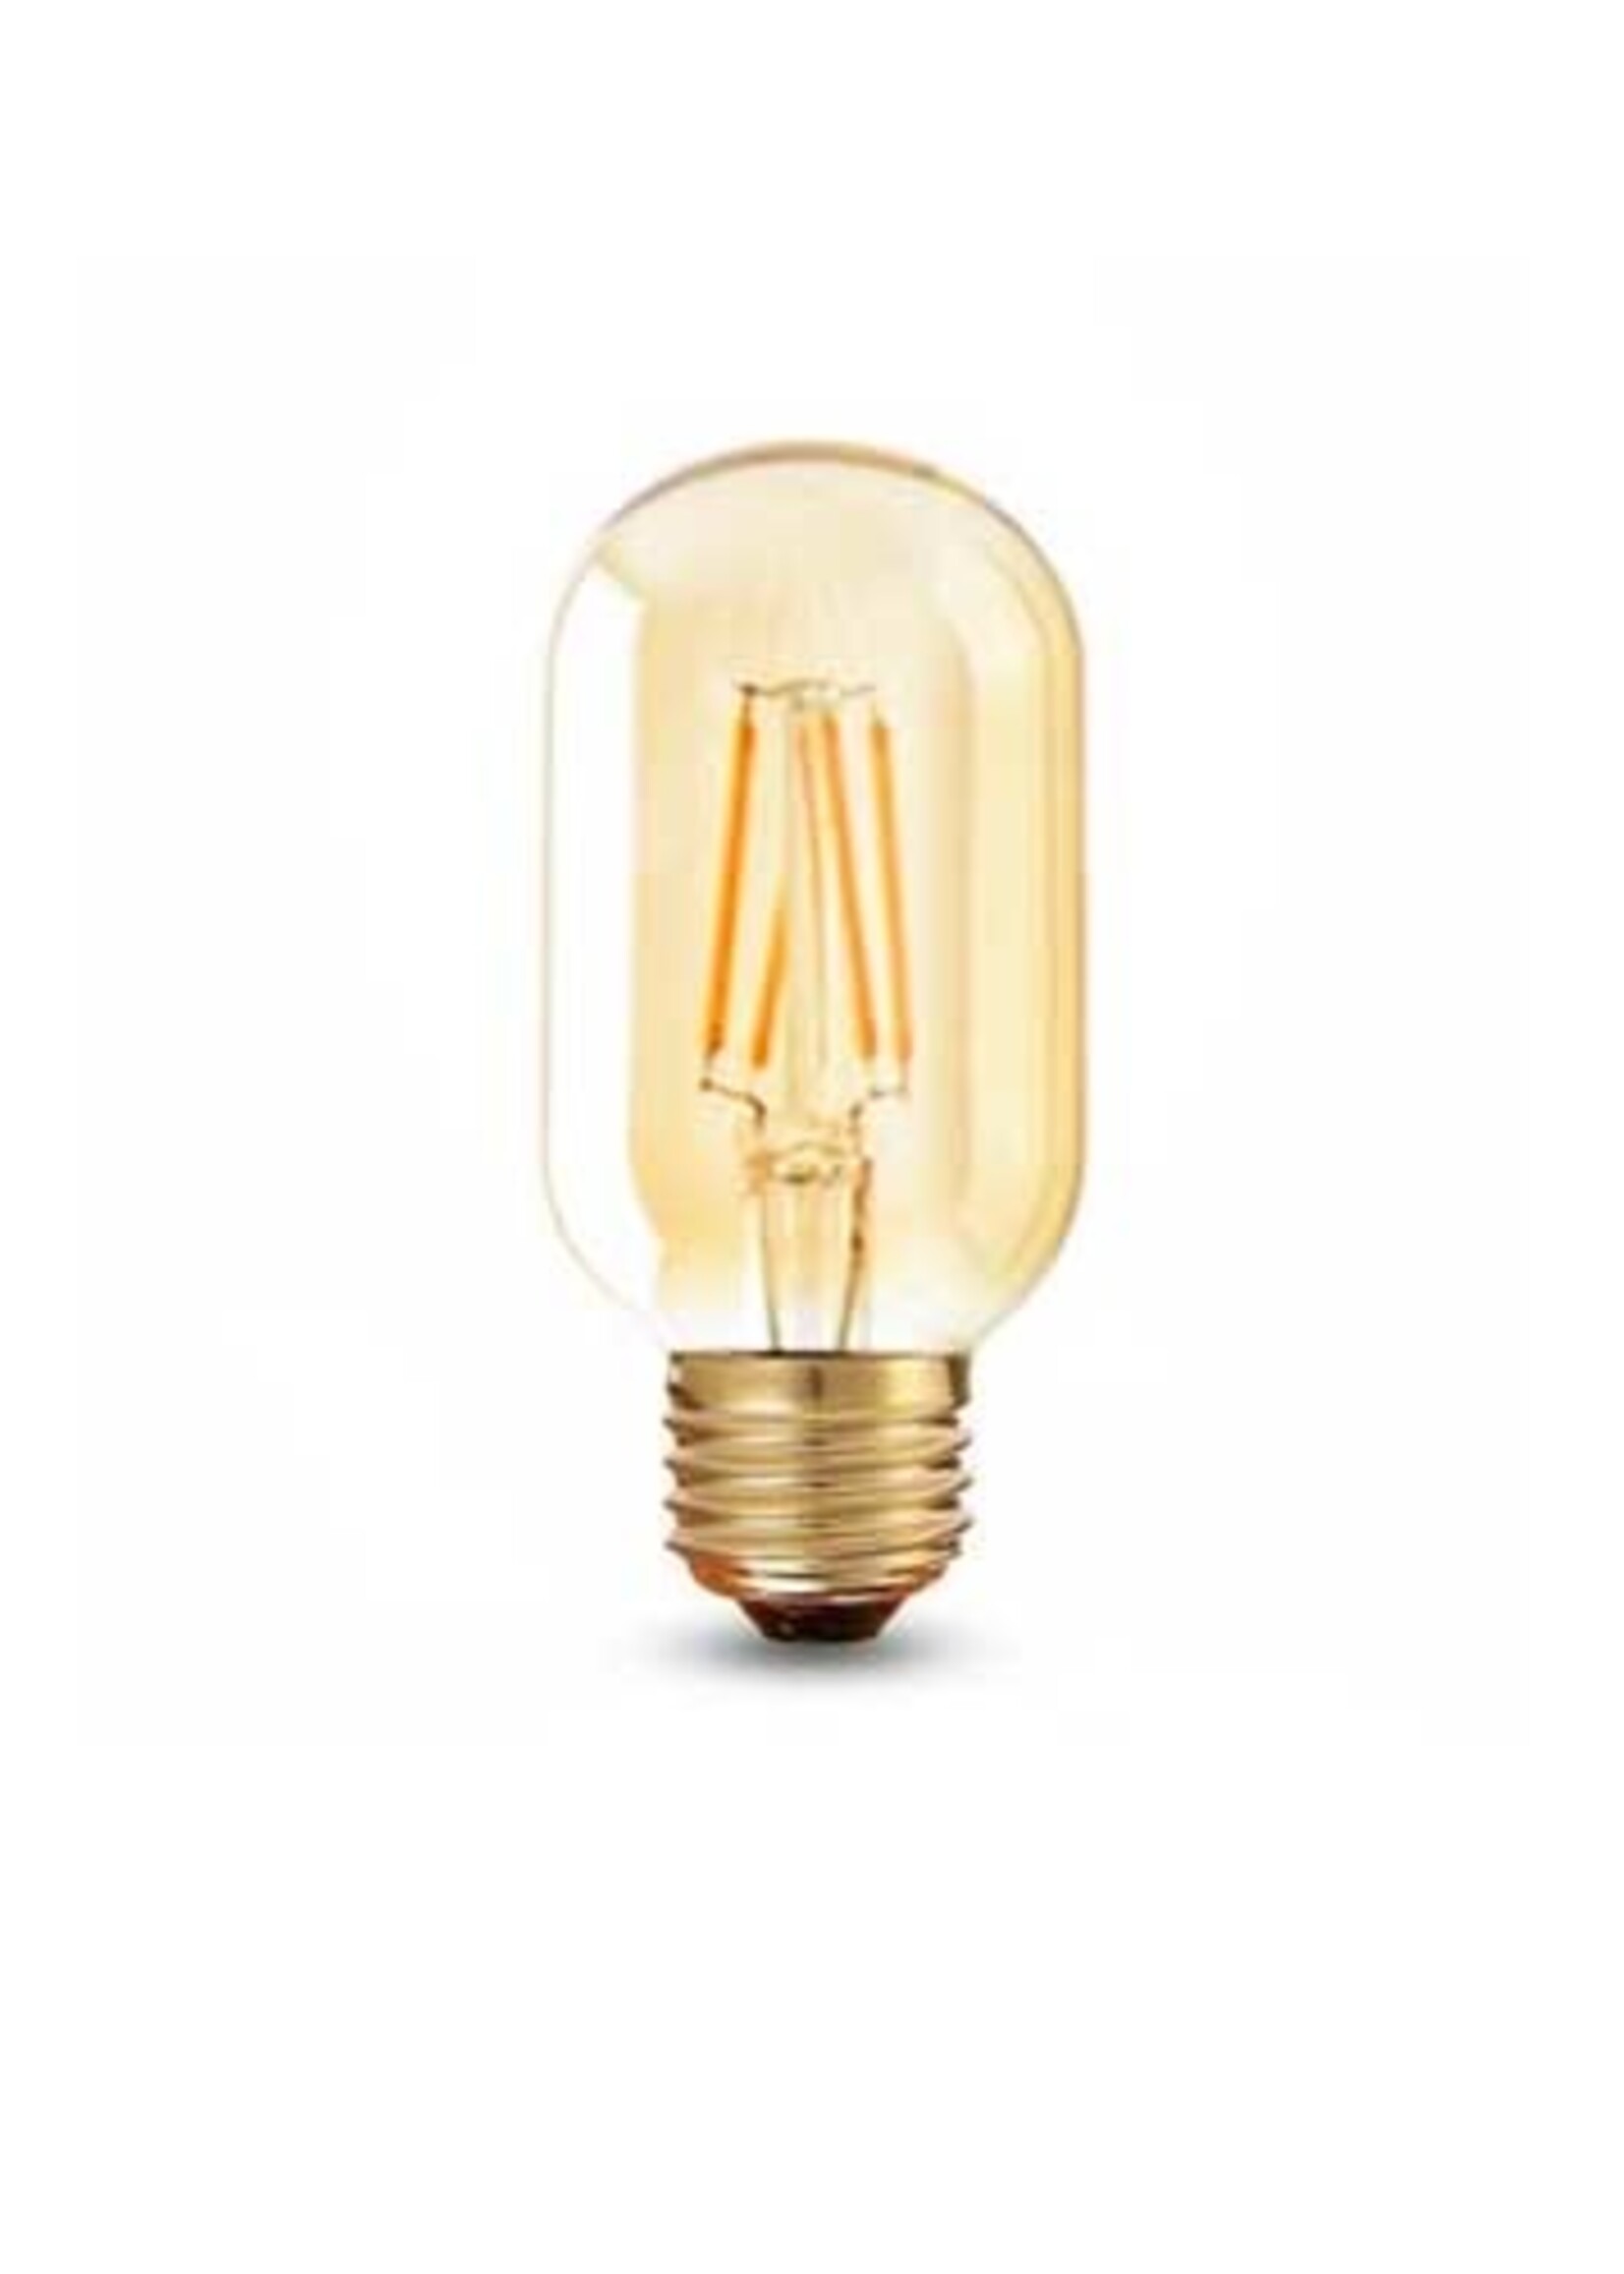 LEDWINKEL-Online E27 LED Lamp filament T45 tube 4W 2200K amber dimmable